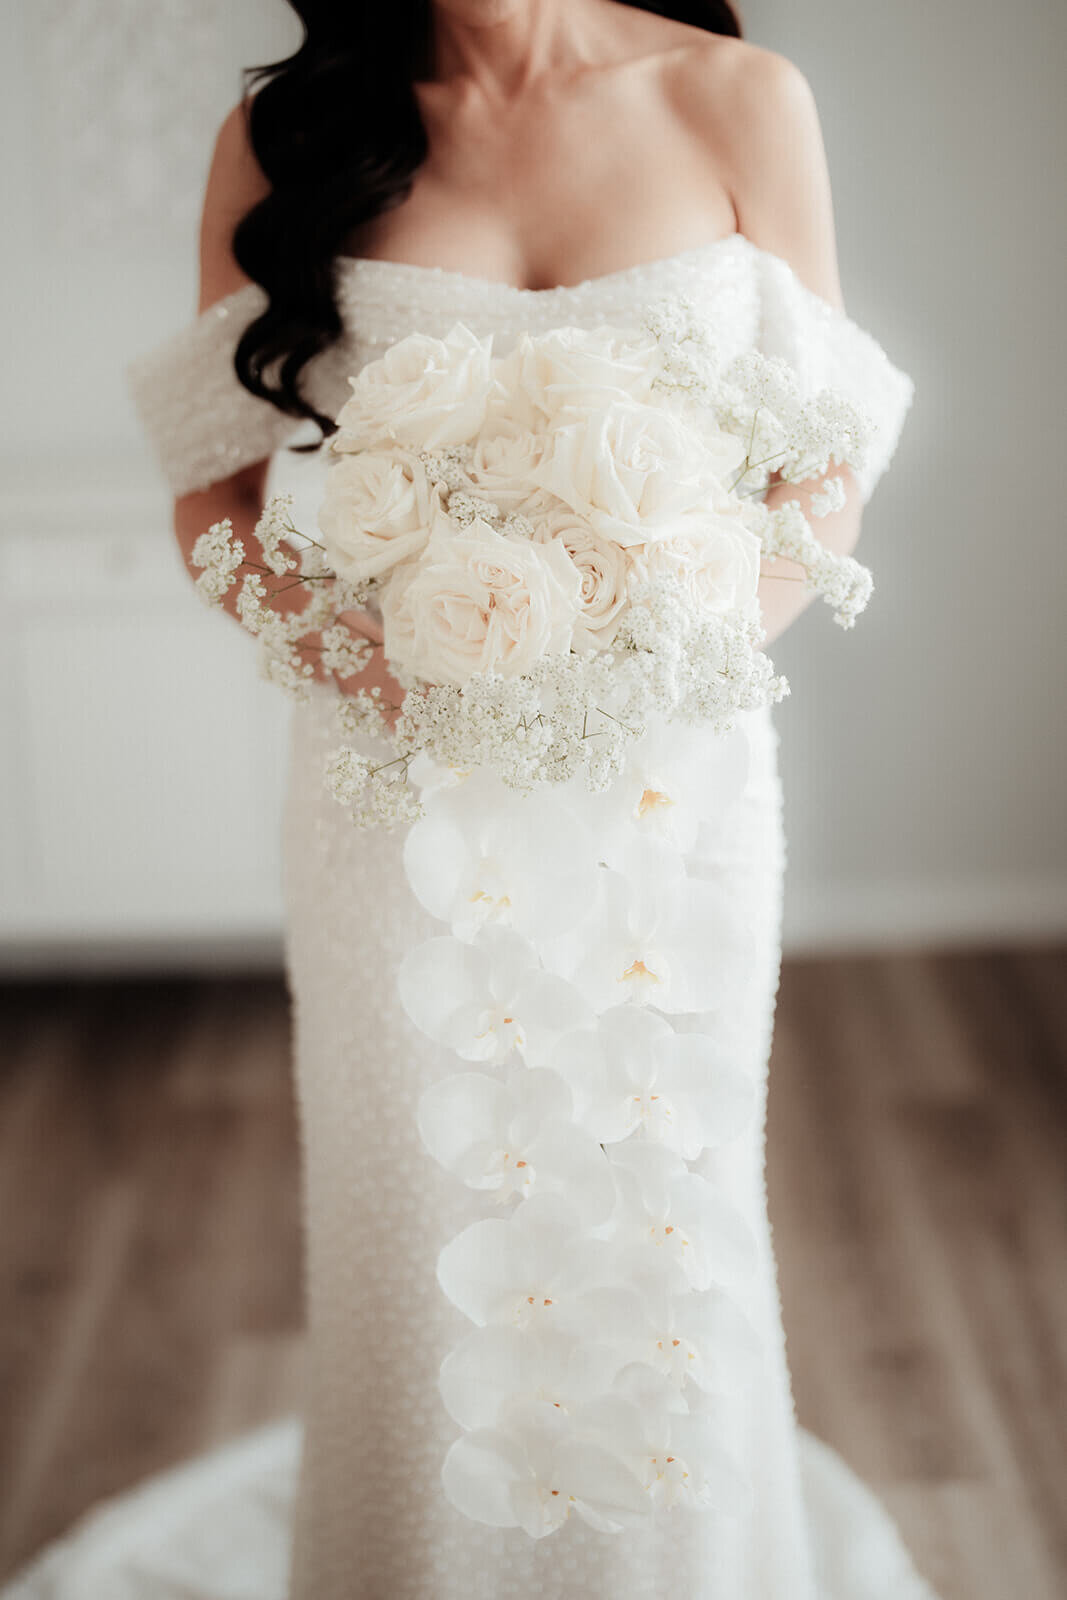 Bride Holding Flowers